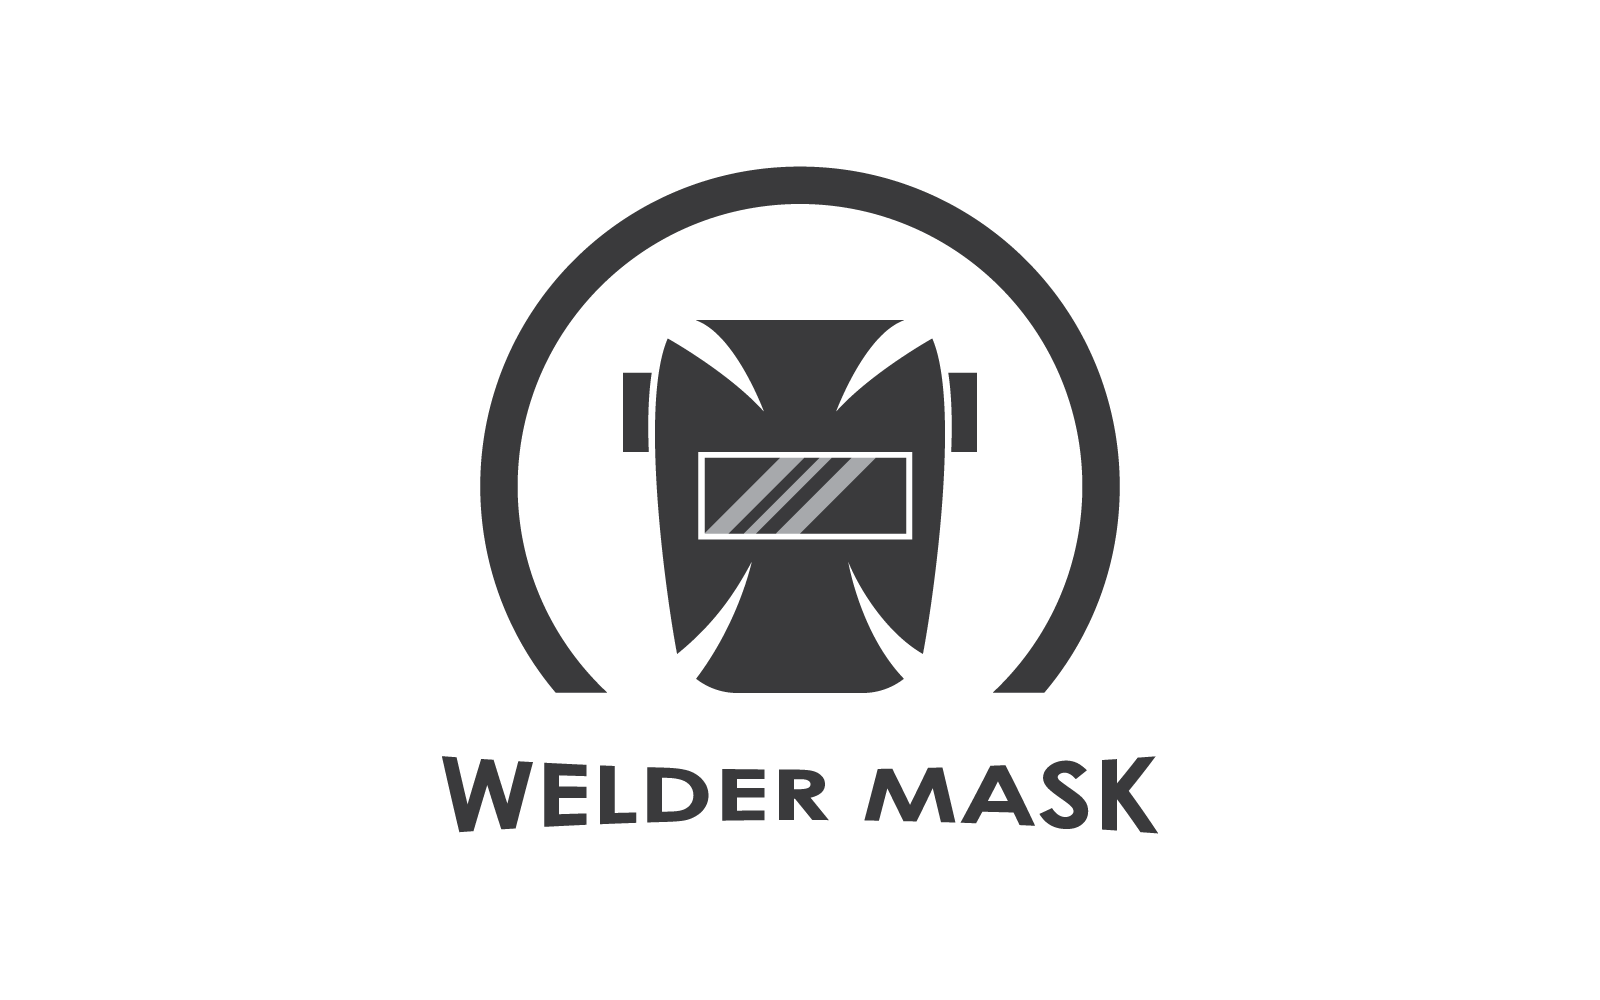 Welder mask logo illustration vector template